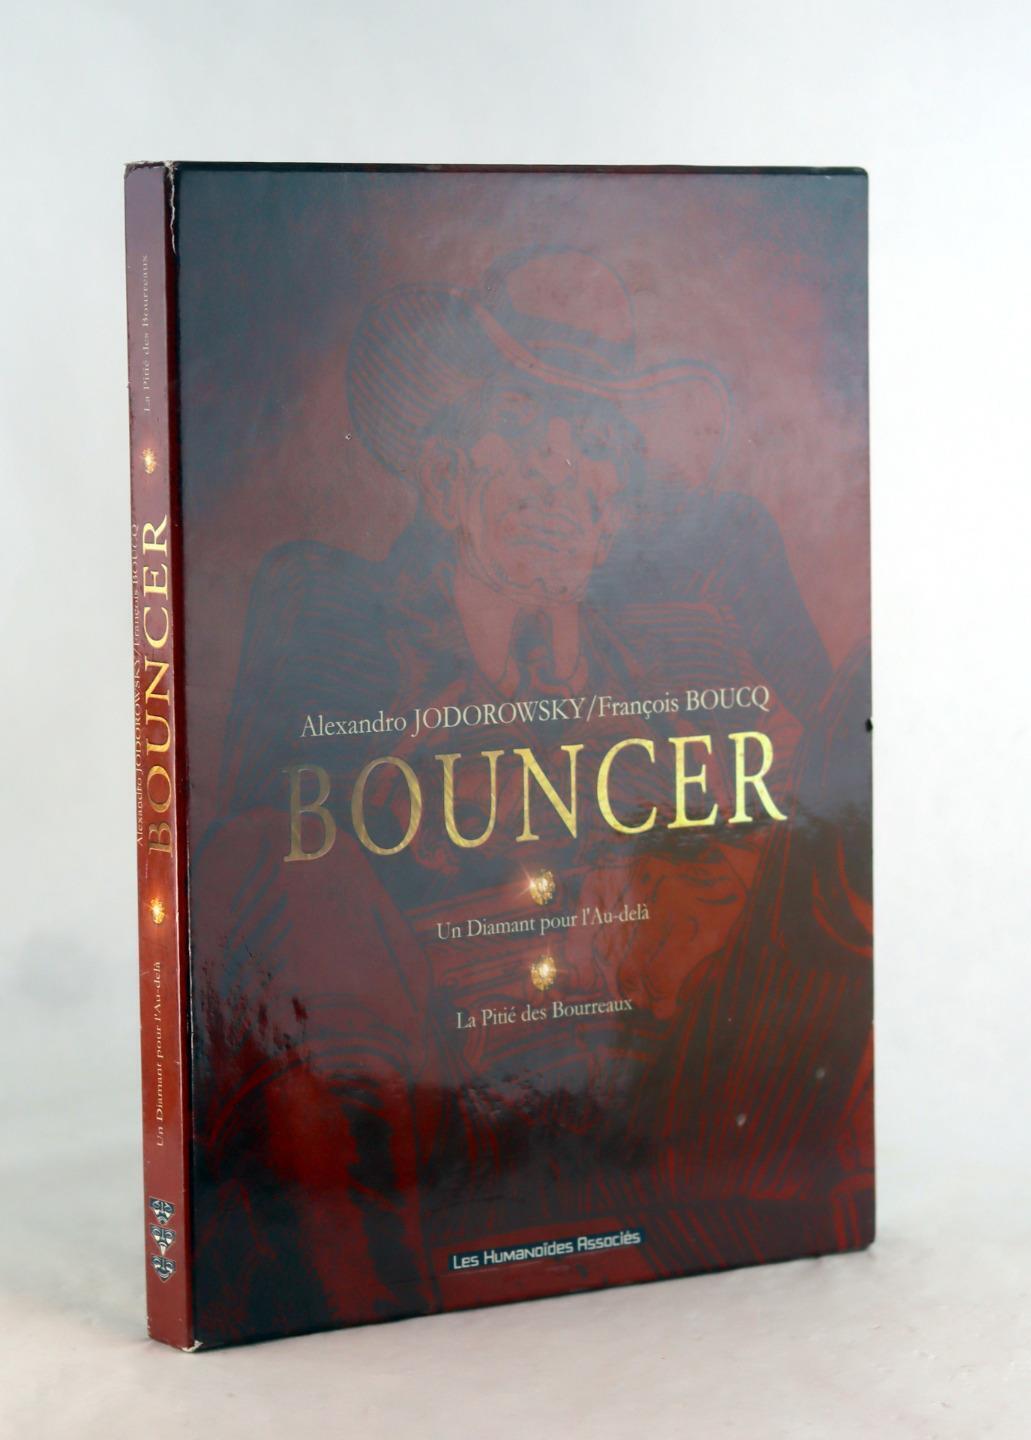 François Boucq & Alexandro Jodorowsky 2002 Bouncer Vol I & II Hardcover